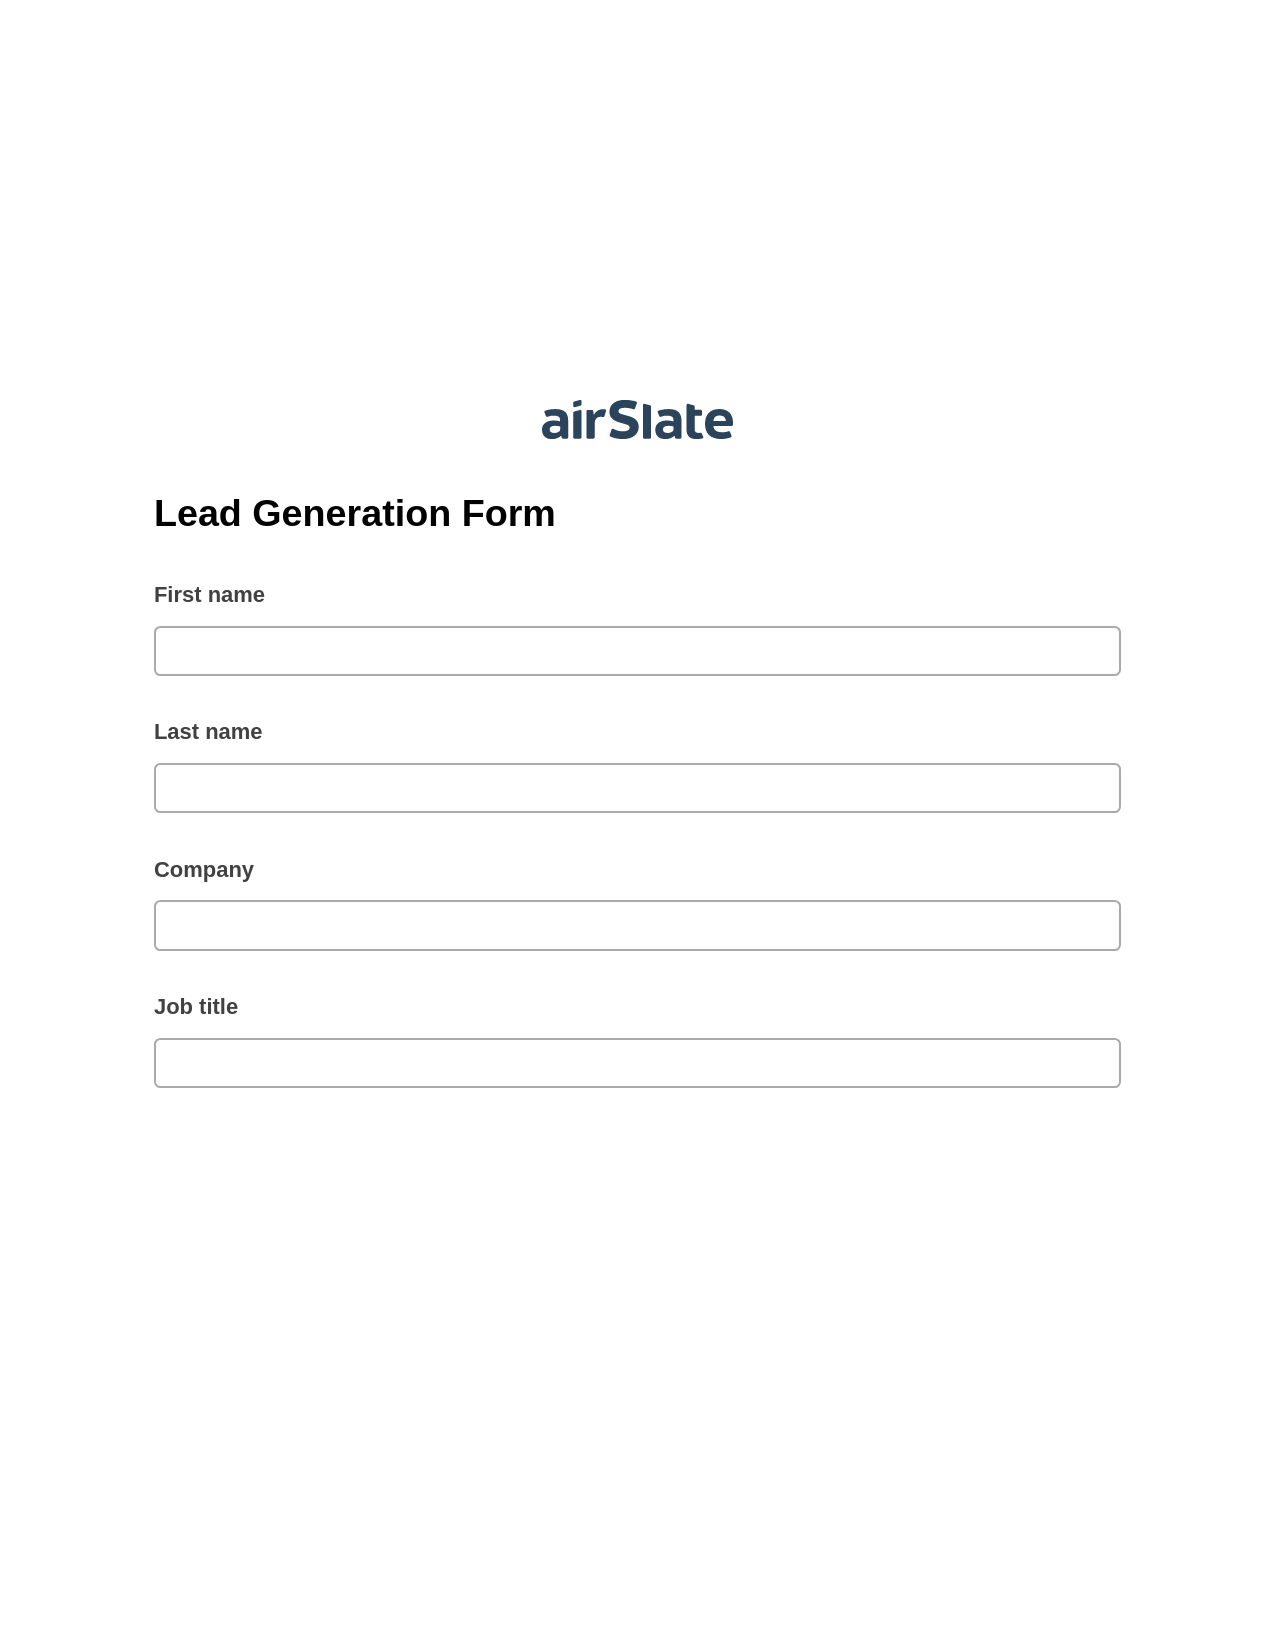 Multirole Lead Generation Form Pre-fill Document Bot, Send a Slate with Roles Bot, Slack Notification Postfinish Bot